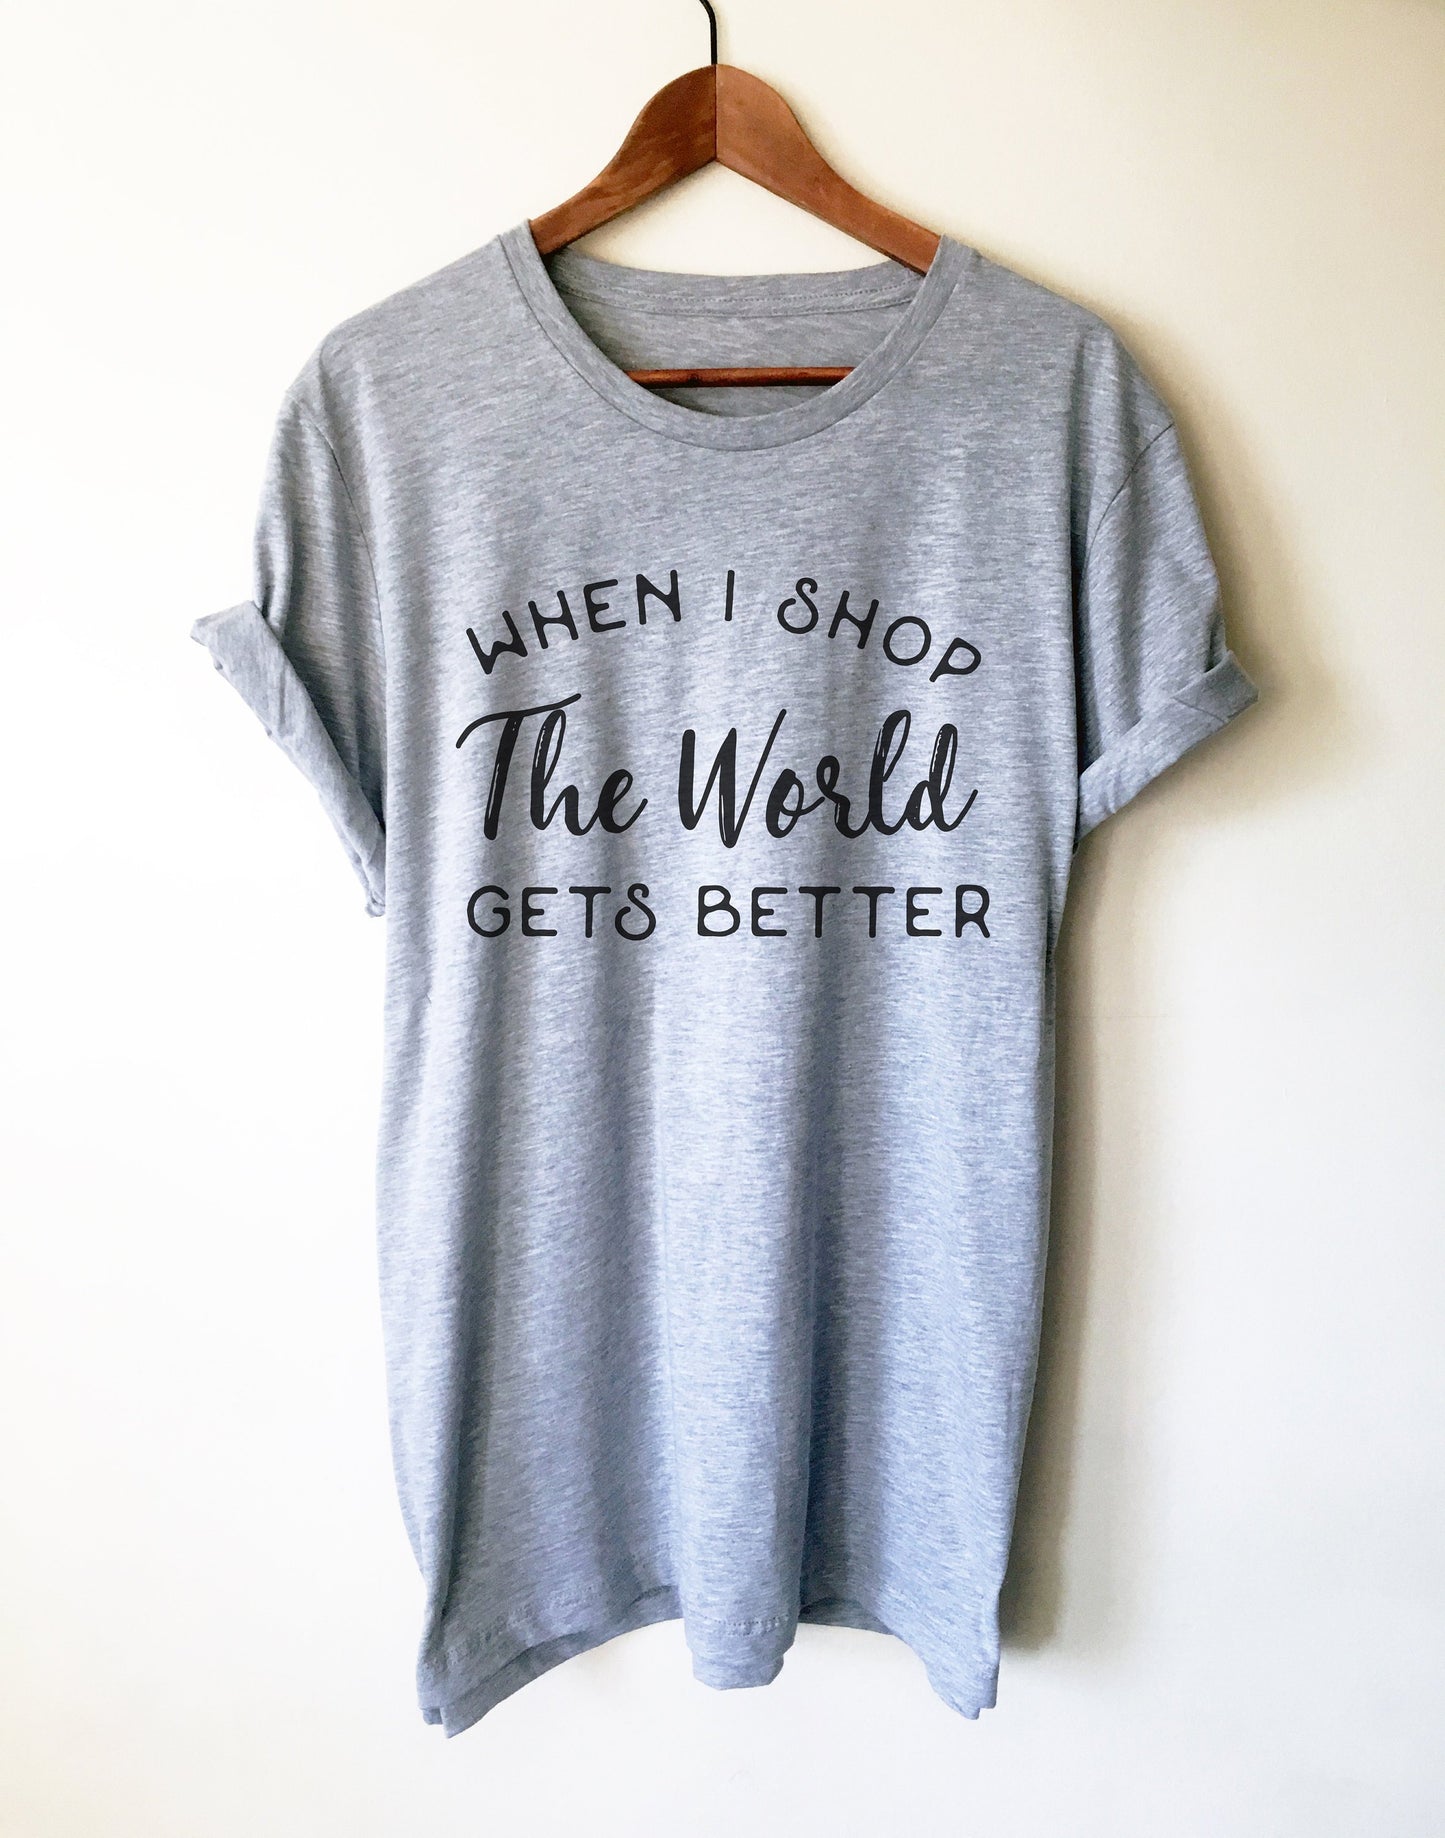 When I Shop The World Gets Better Unisex Shirt - Shopping Shirt, Shopping Gift, Shopaholic Shirt, Shopaholic Gift, Black Friday Shirt